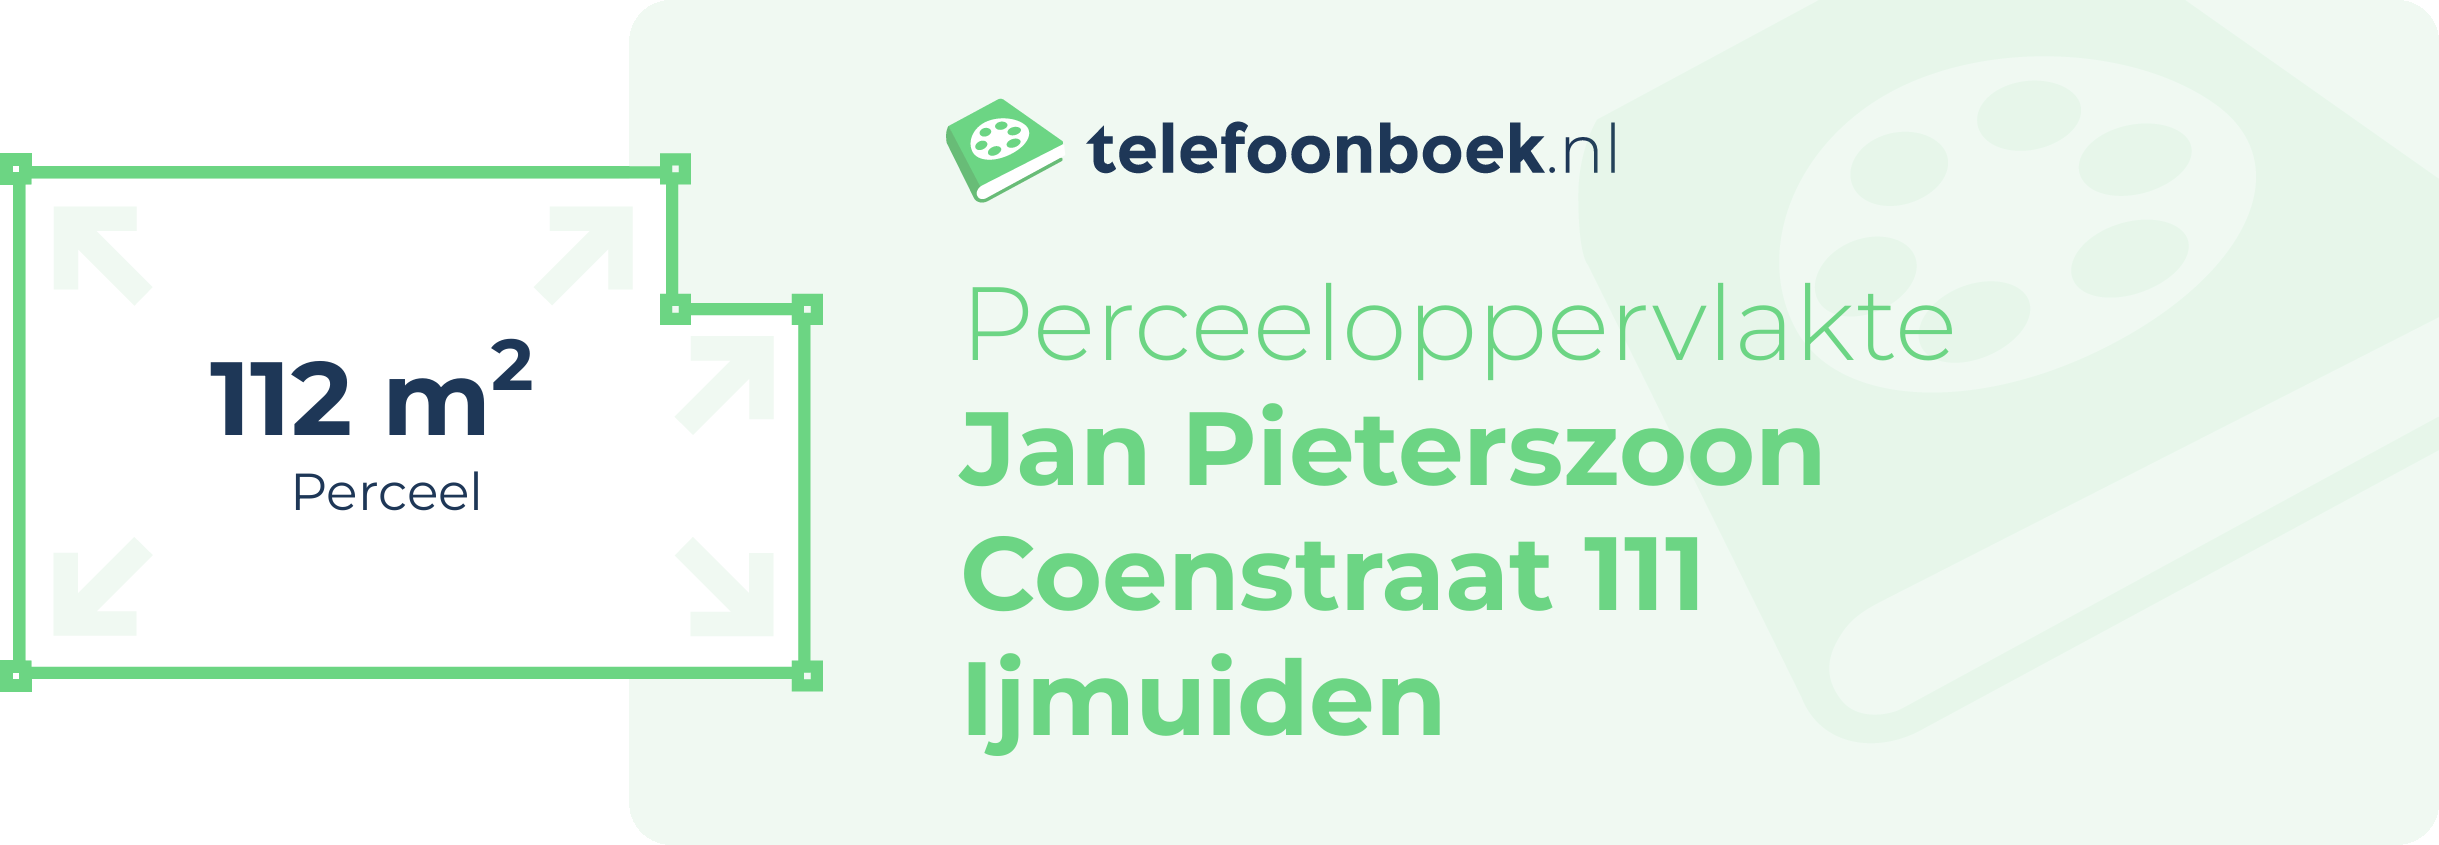 Perceeloppervlakte Jan Pieterszoon Coenstraat 111 Ijmuiden